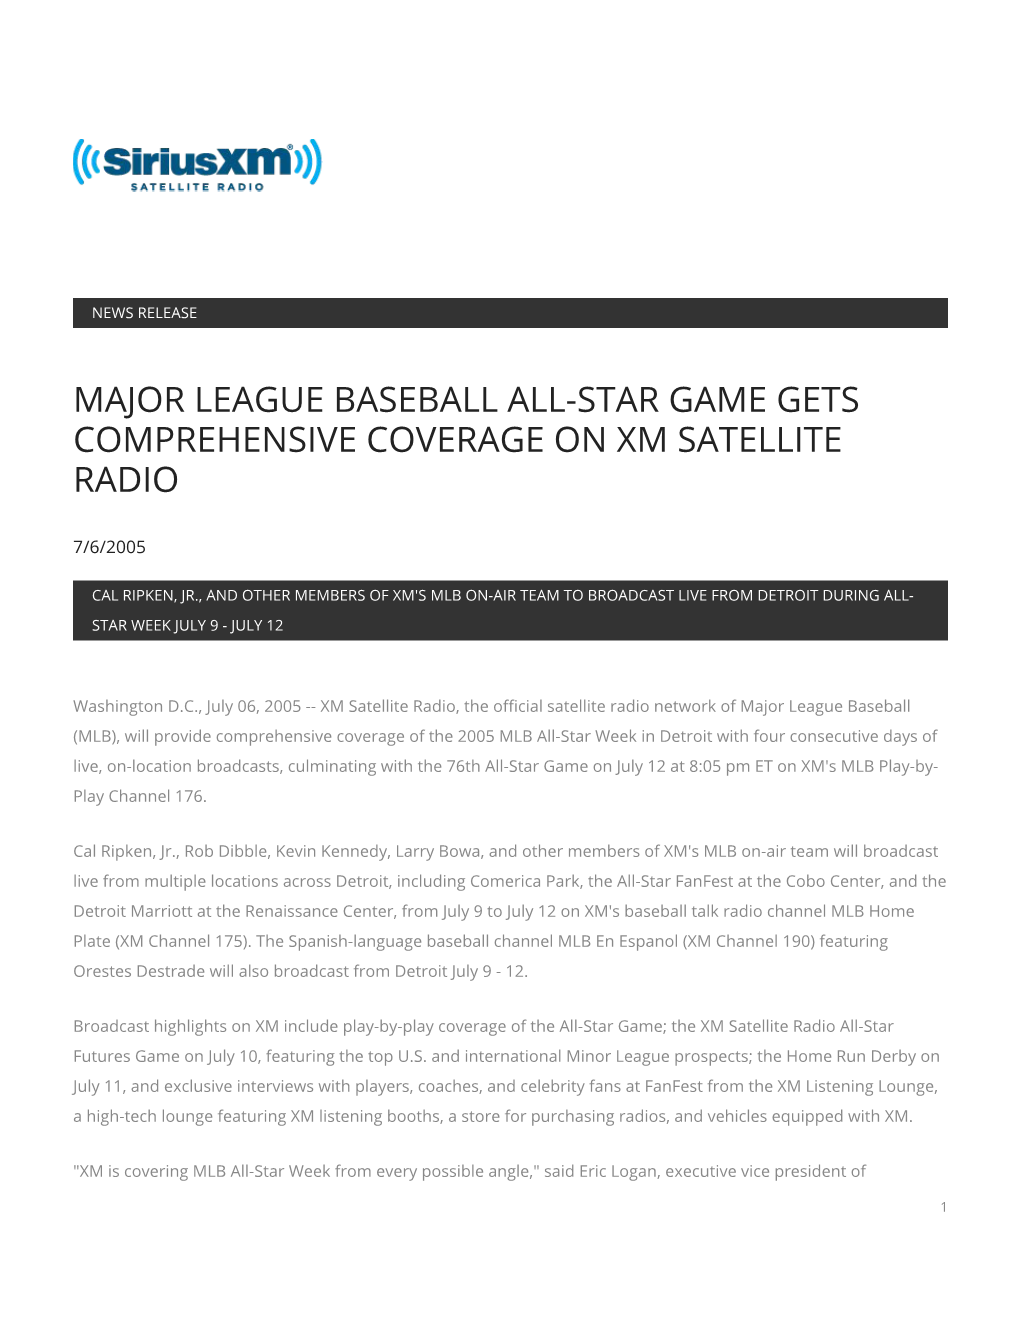 Major League Baseball All-Star Game Gets Comprehensive Coverage on Xm Satellite Radio